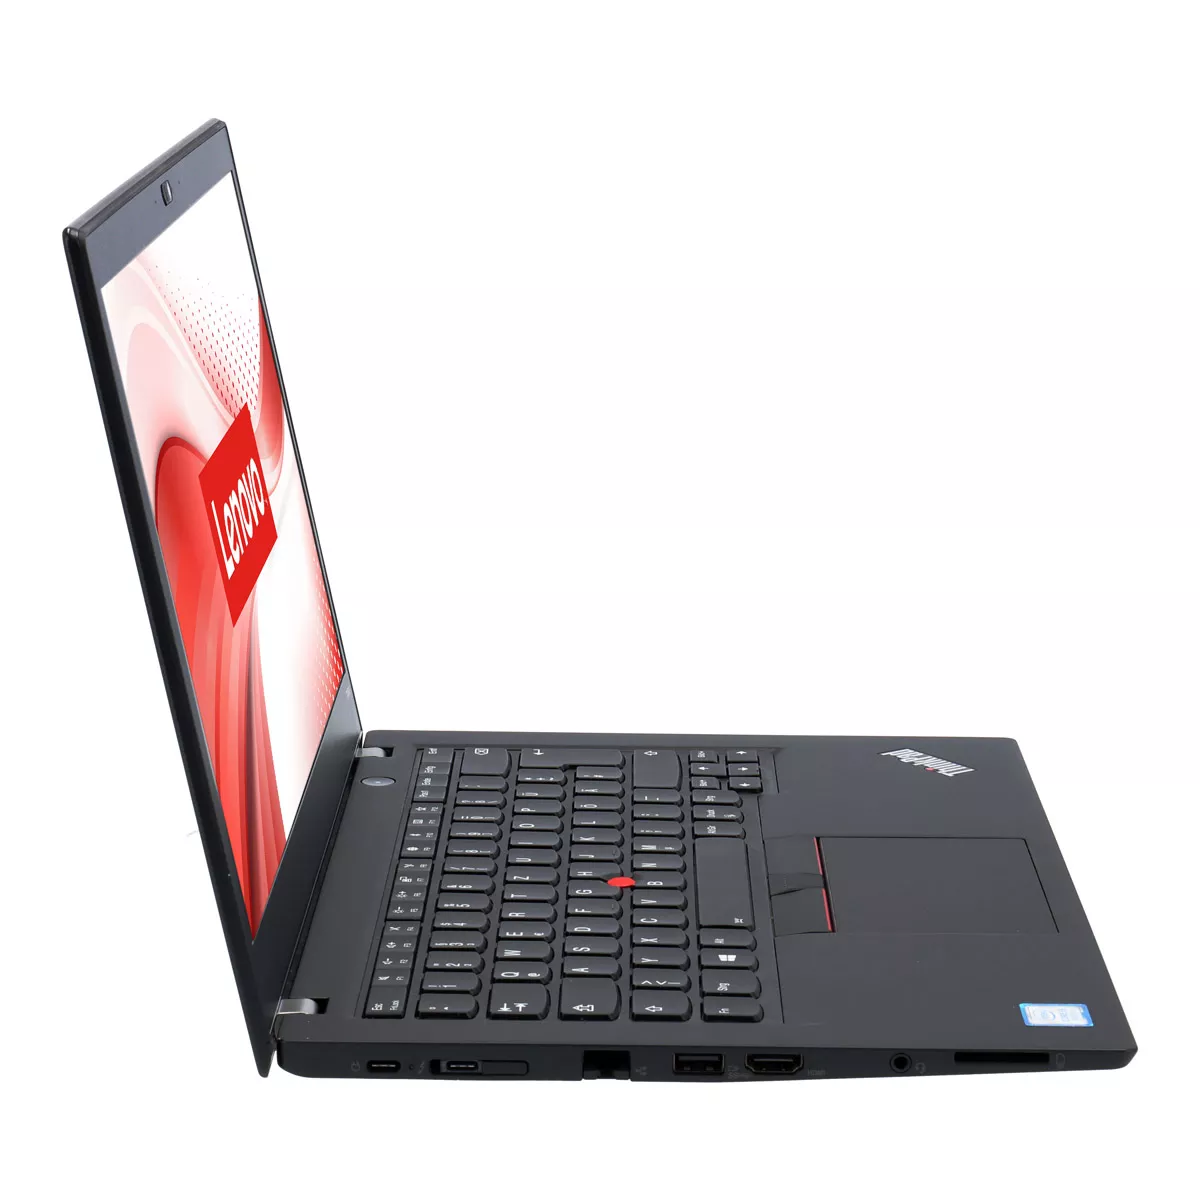 Lenovo ThinkPad T480s Core i5 8350U Full-HD Touch 240 GB M.2 nVME SSD Webcam B